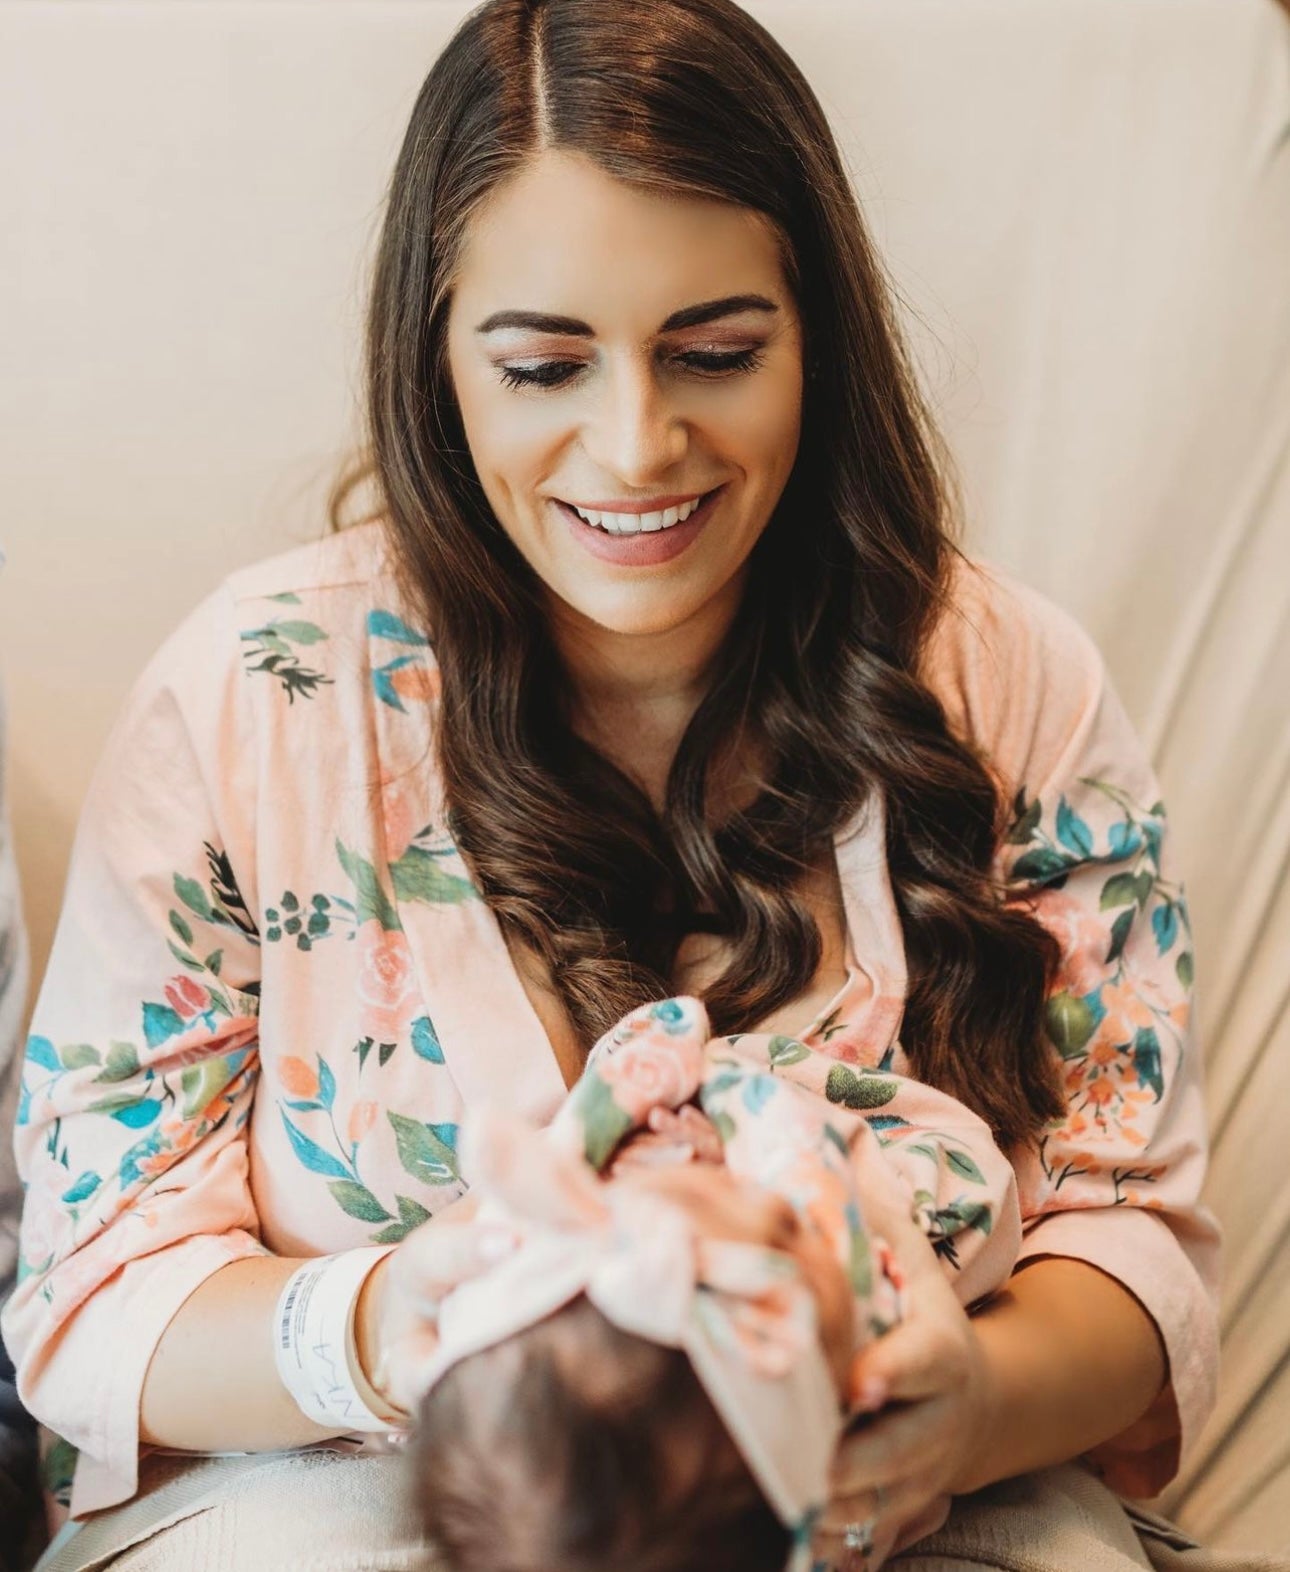 Nina Pregnancy/Postpartum Robe & Swaddle Blanket Set